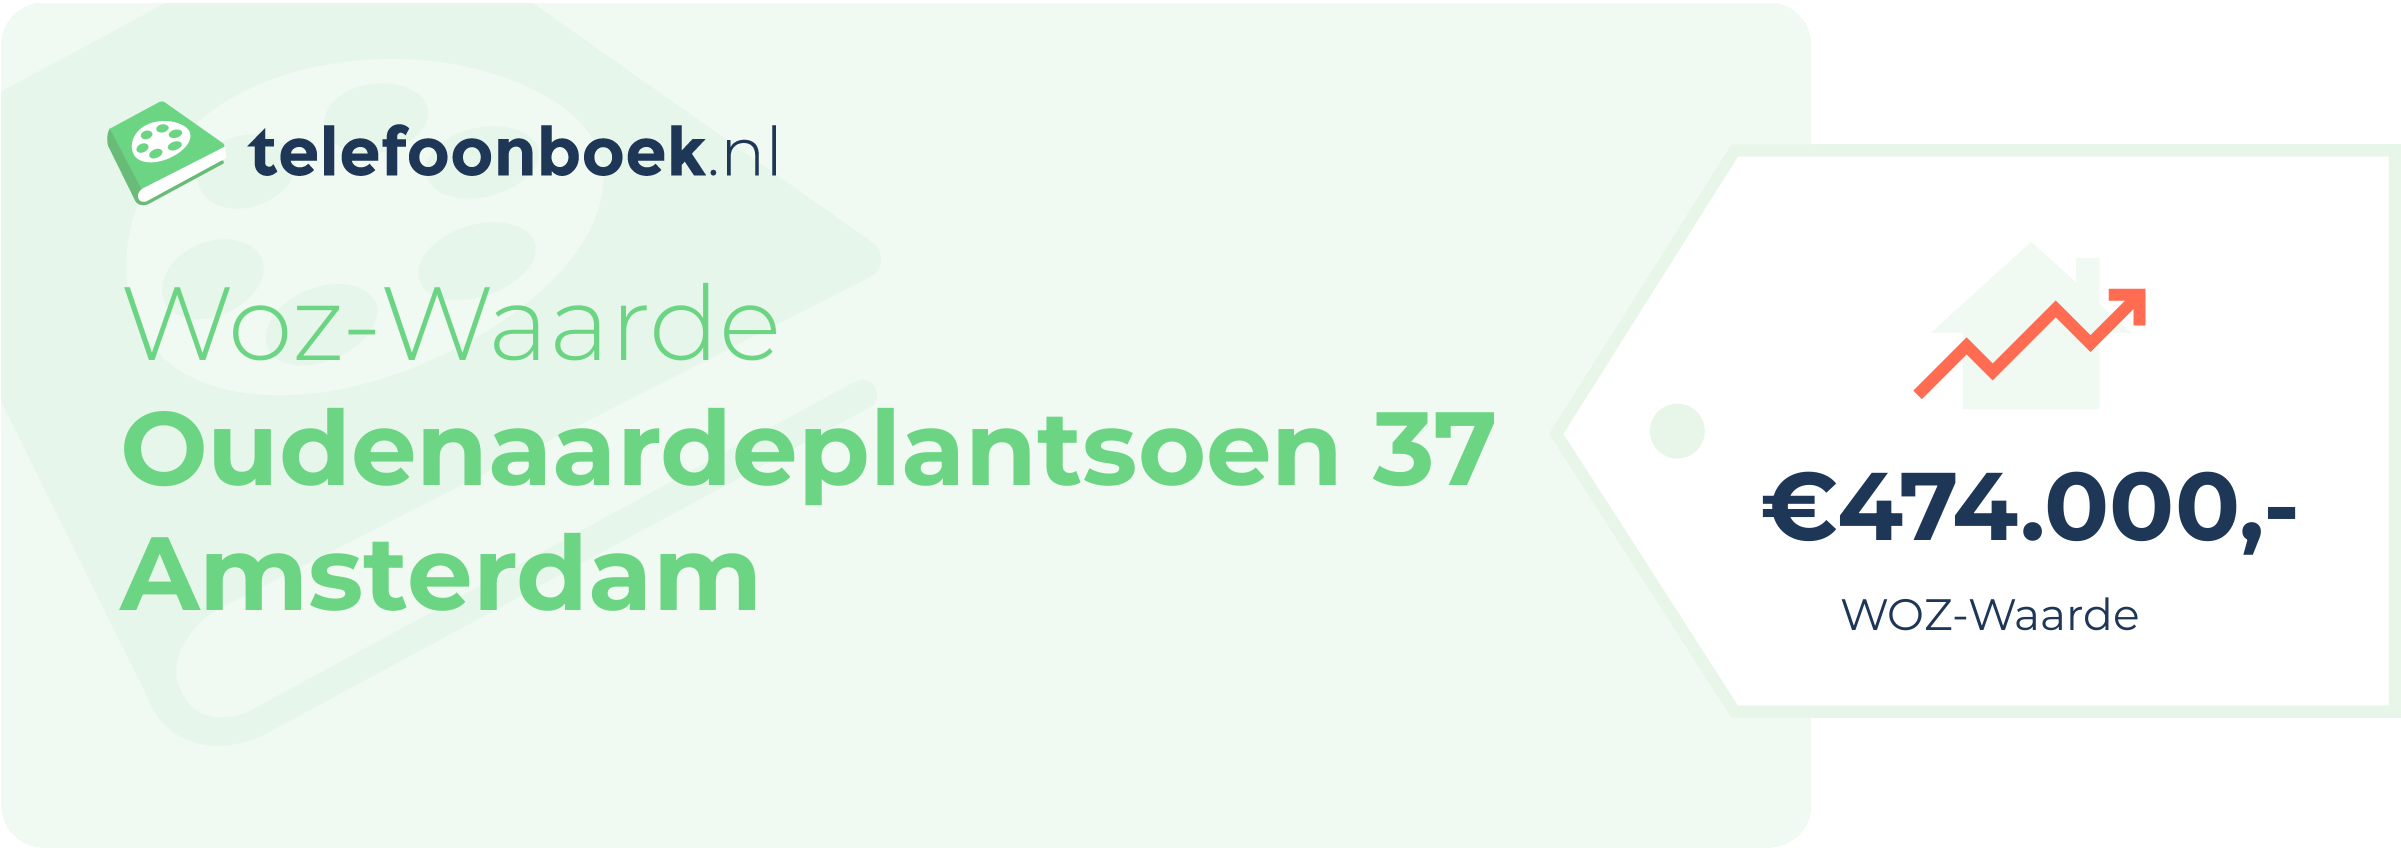 WOZ-waarde Oudenaardeplantsoen 37 Amsterdam